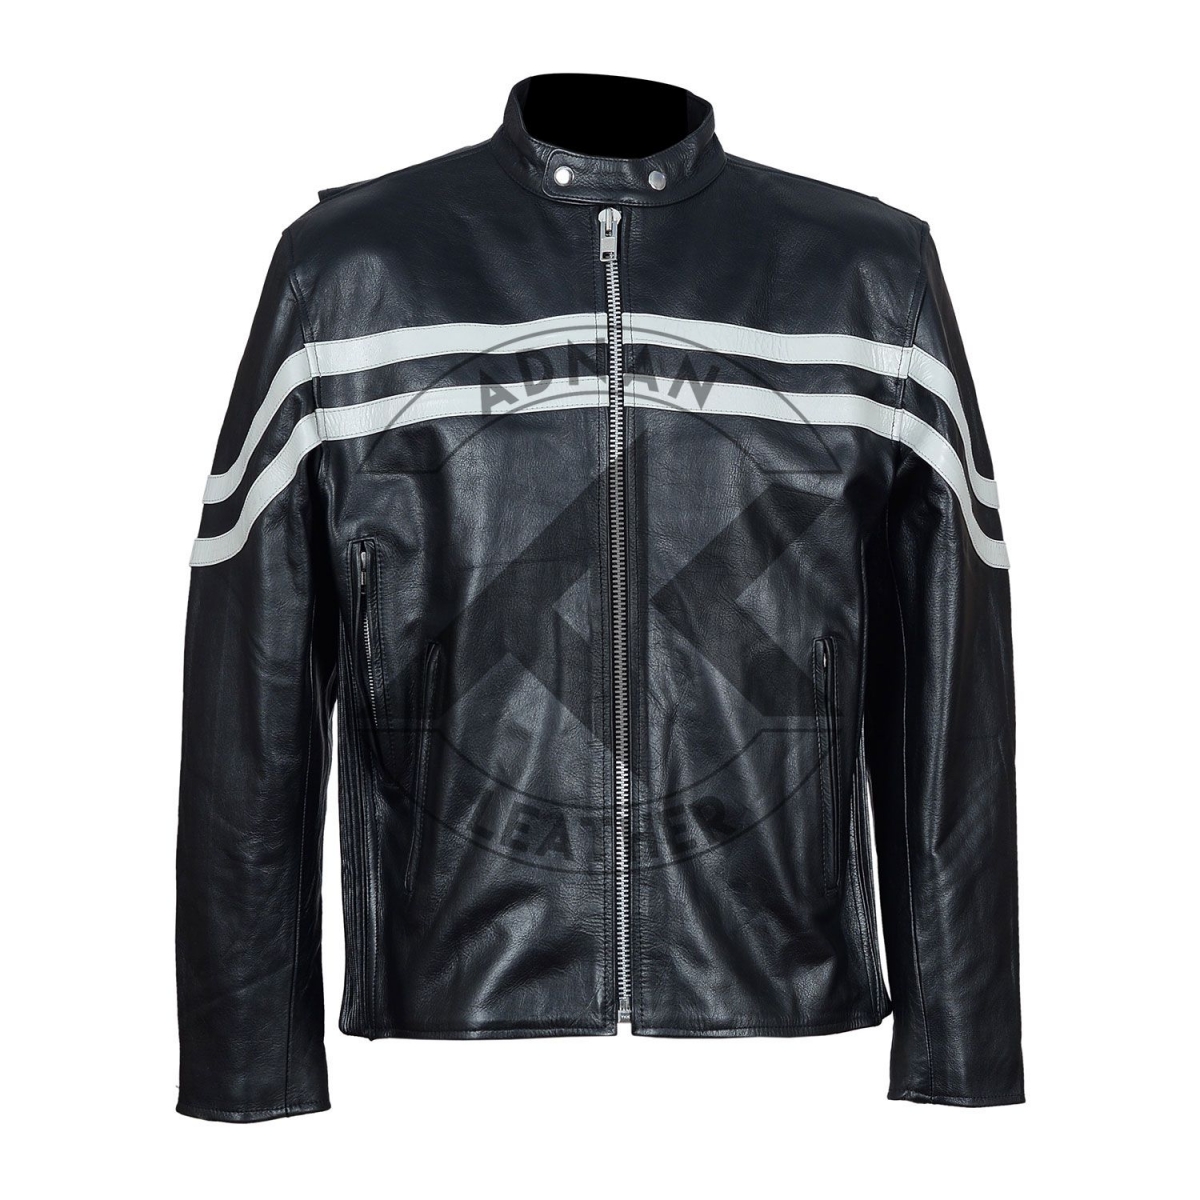 Men Motorcycle Jacket - AK Adnan Leather Ltd.